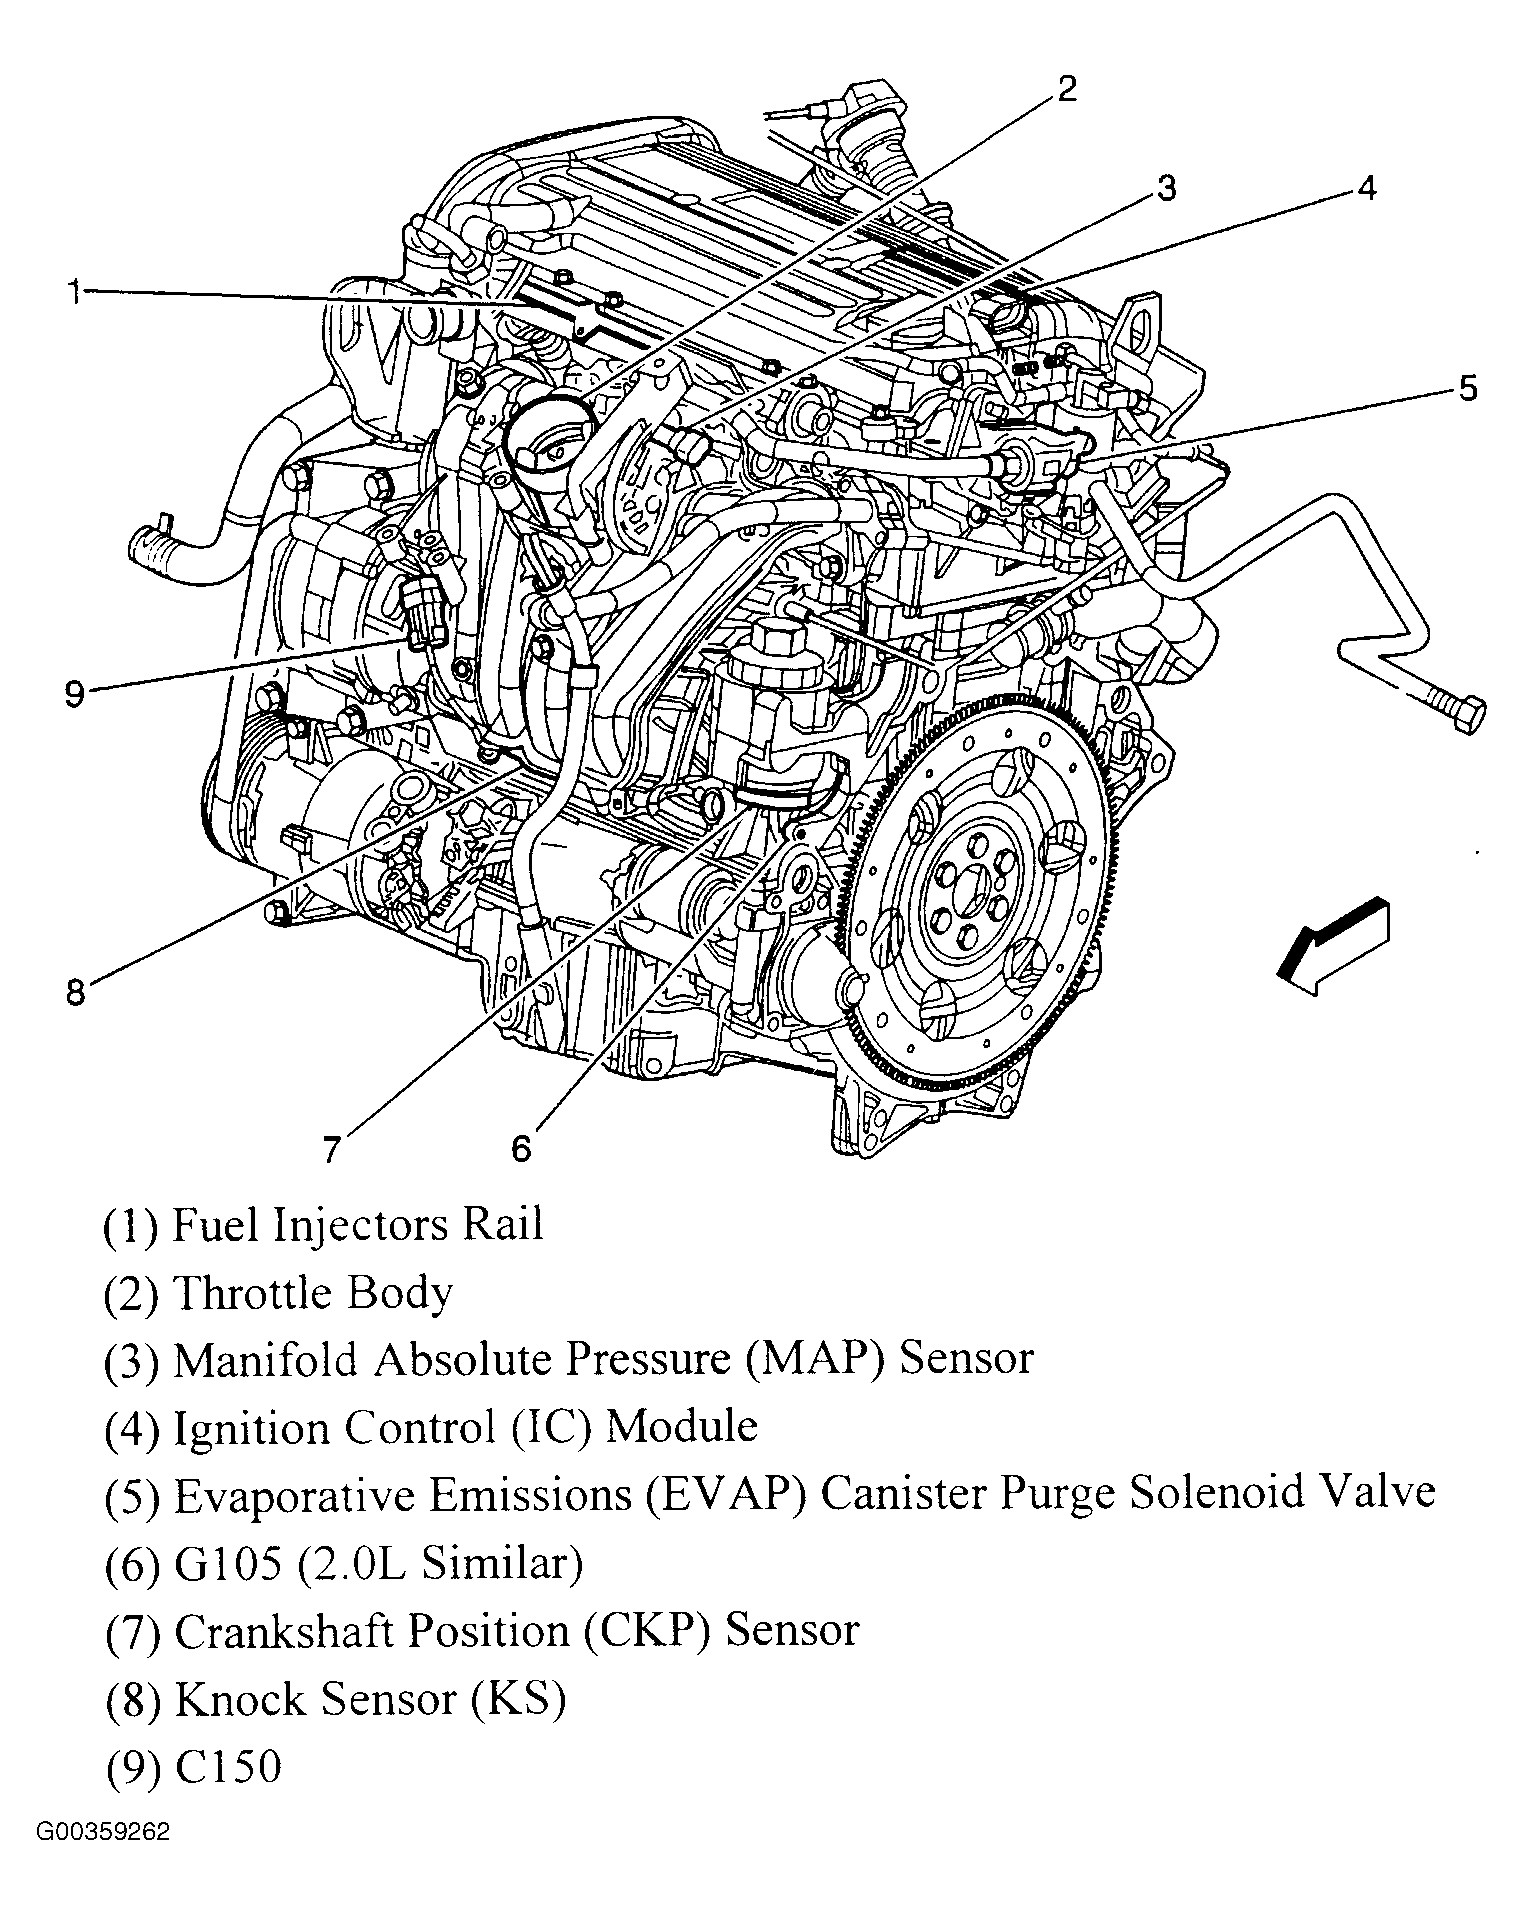 Saturn Ion Engine Diagram 97 Saturn Sl2 Engine Diagram Saturn Wiring Diagrams Instructions Of Saturn Ion Engine Diagram